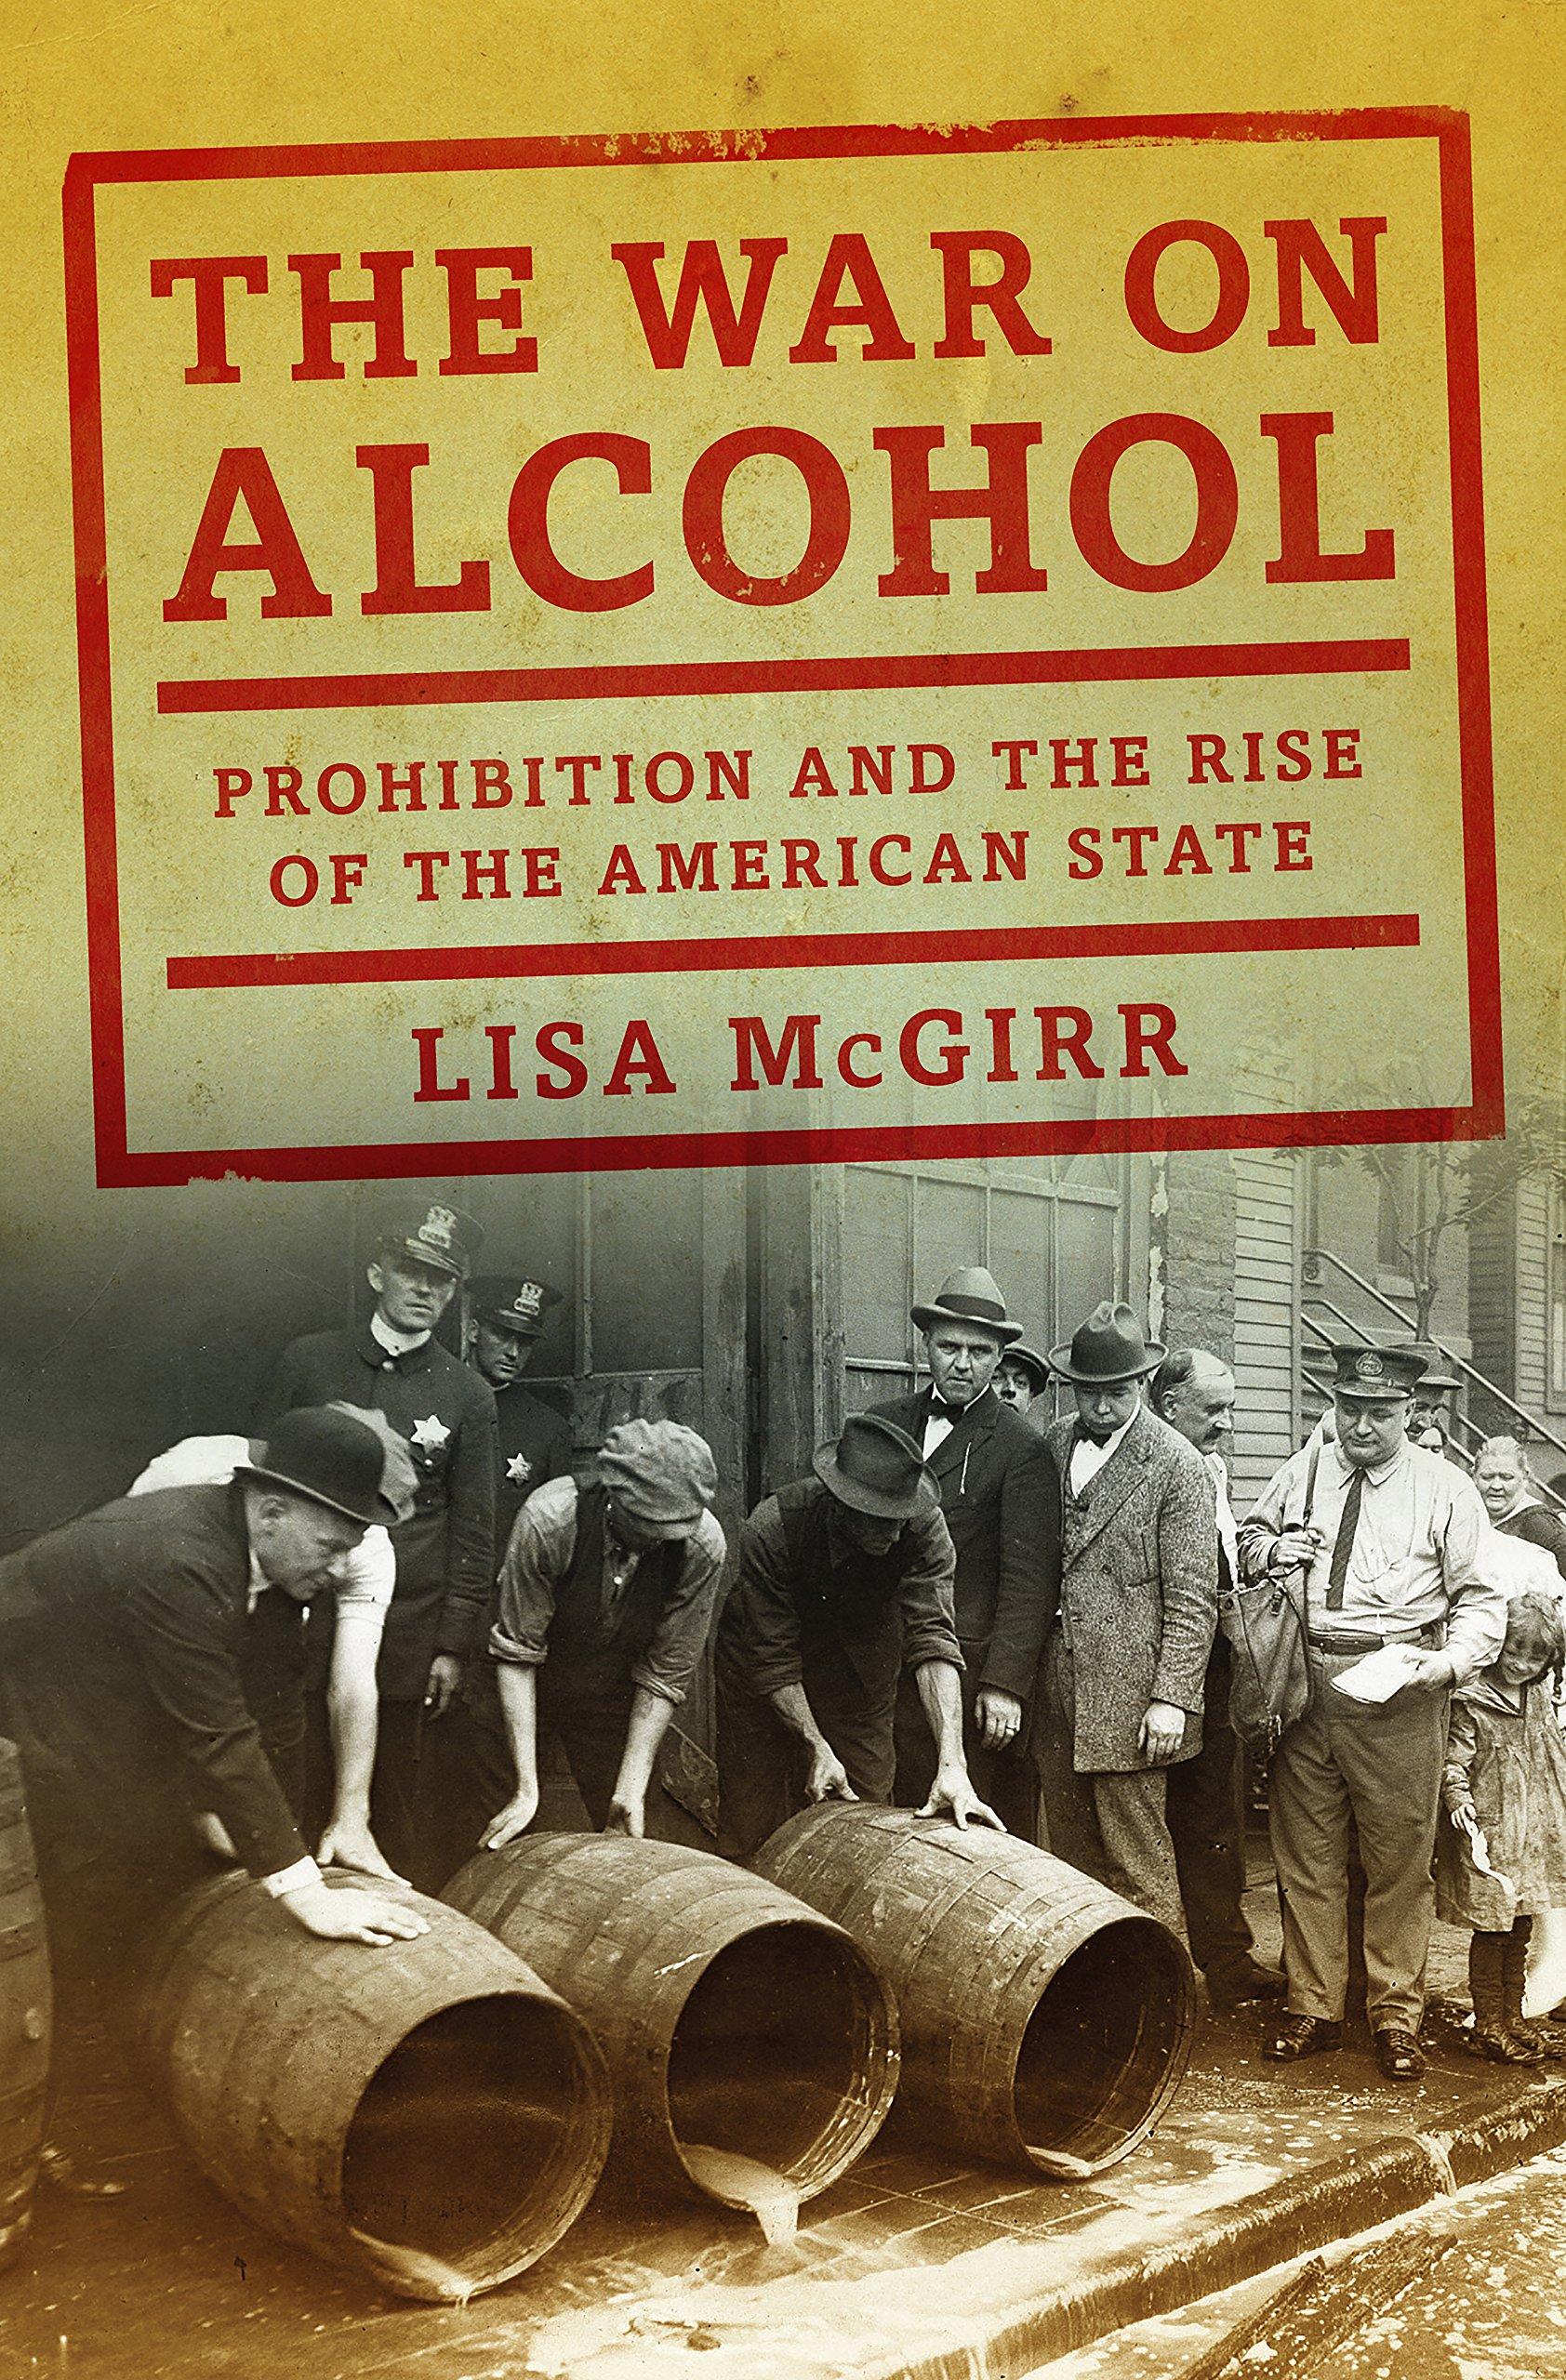 prohibition in the 1920s essay